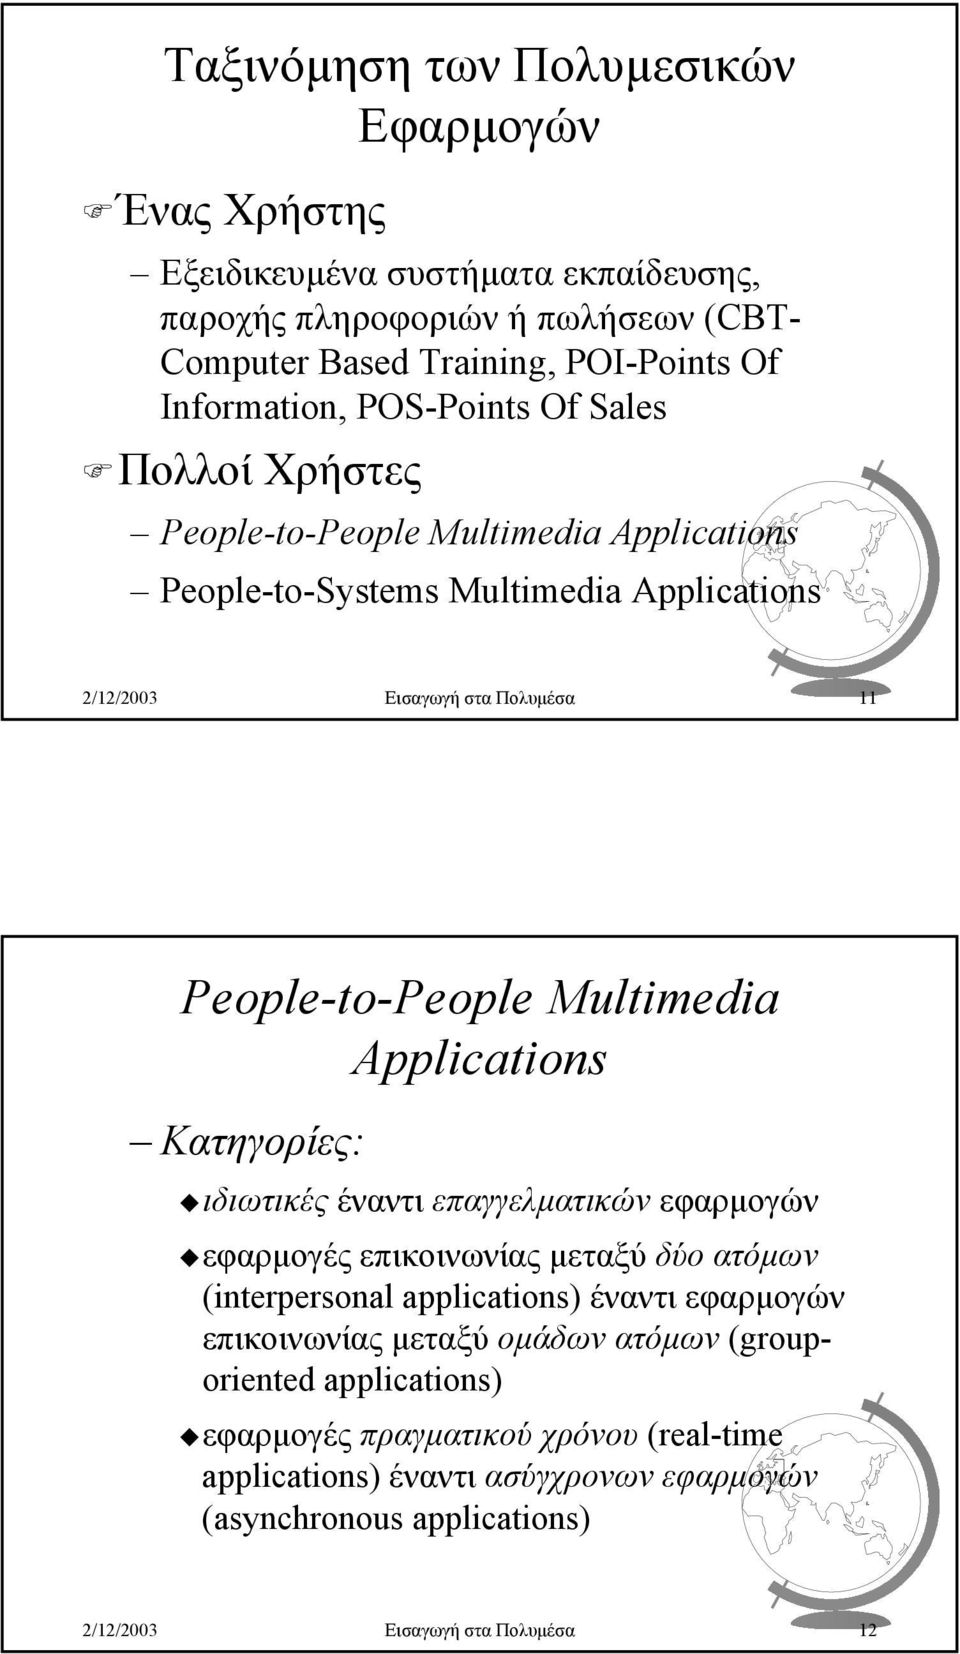 Multimedia Applications Κατηγορίες: ιδιωτικές έναντι επαγγελµατικών εφαρµογών εφαρµογές επικοινωνίας µεταξύ δύο ατόµων (interpersonal applications) έναντι εφαρµογών επικοινωνίας